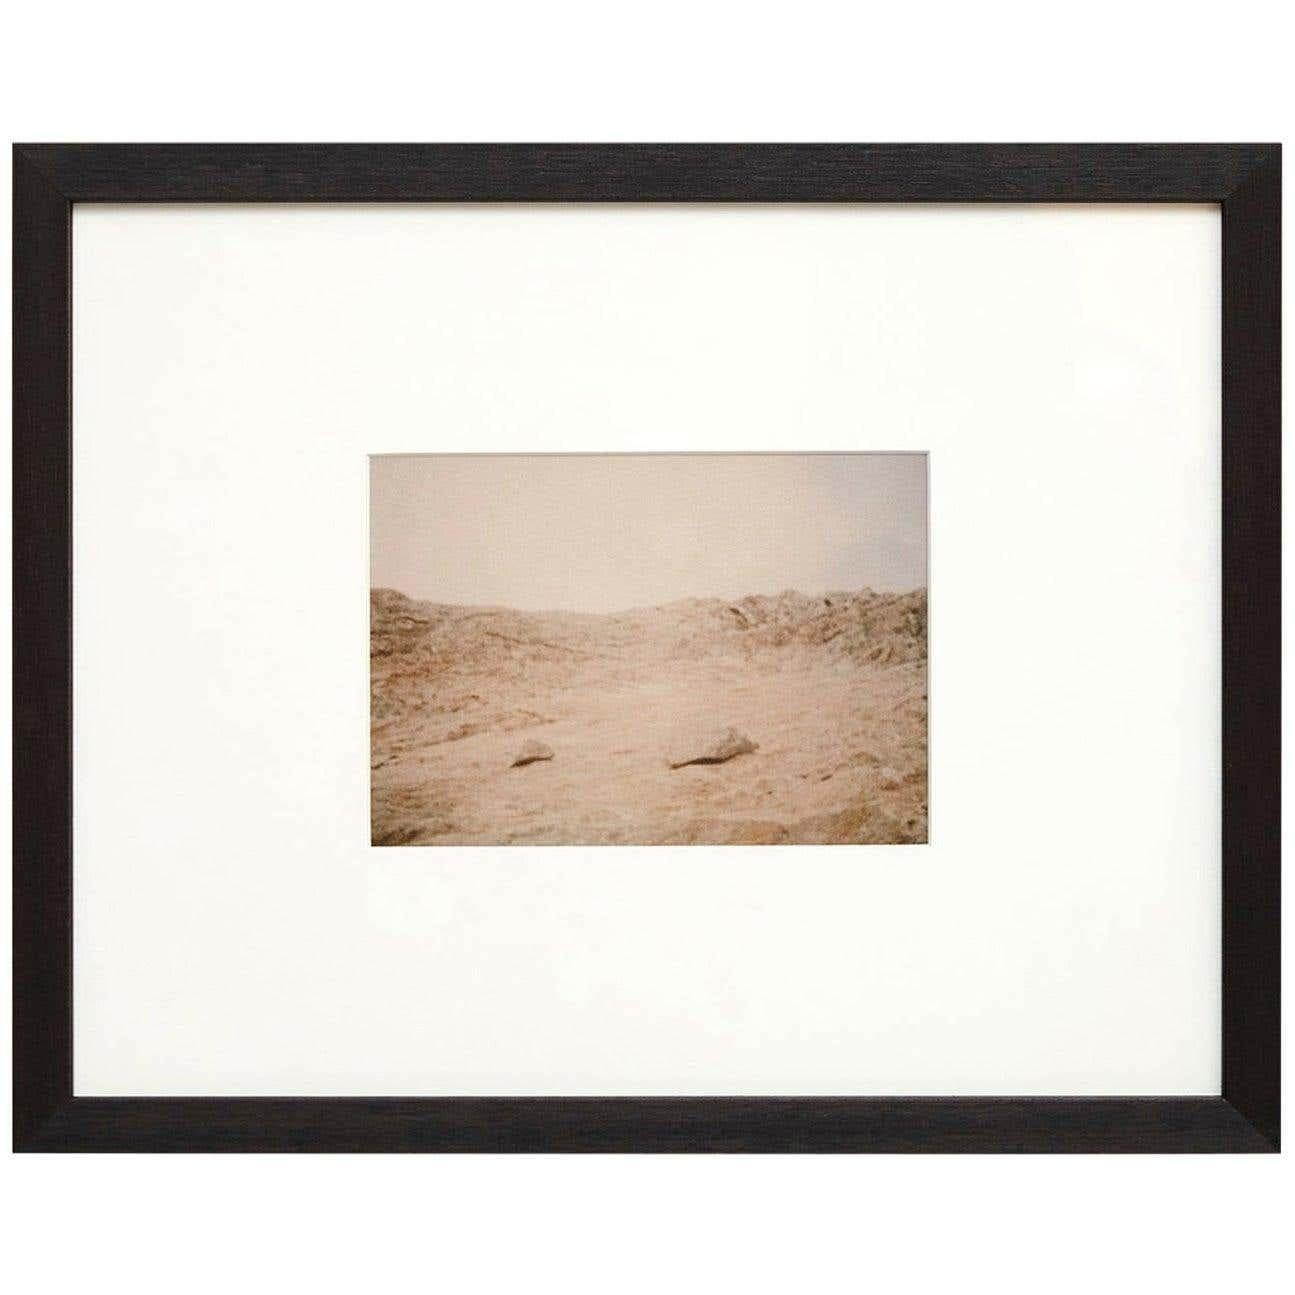 "Desert Landscape" by David Urbano, Rewind or Forward Serie, N01 For Sale